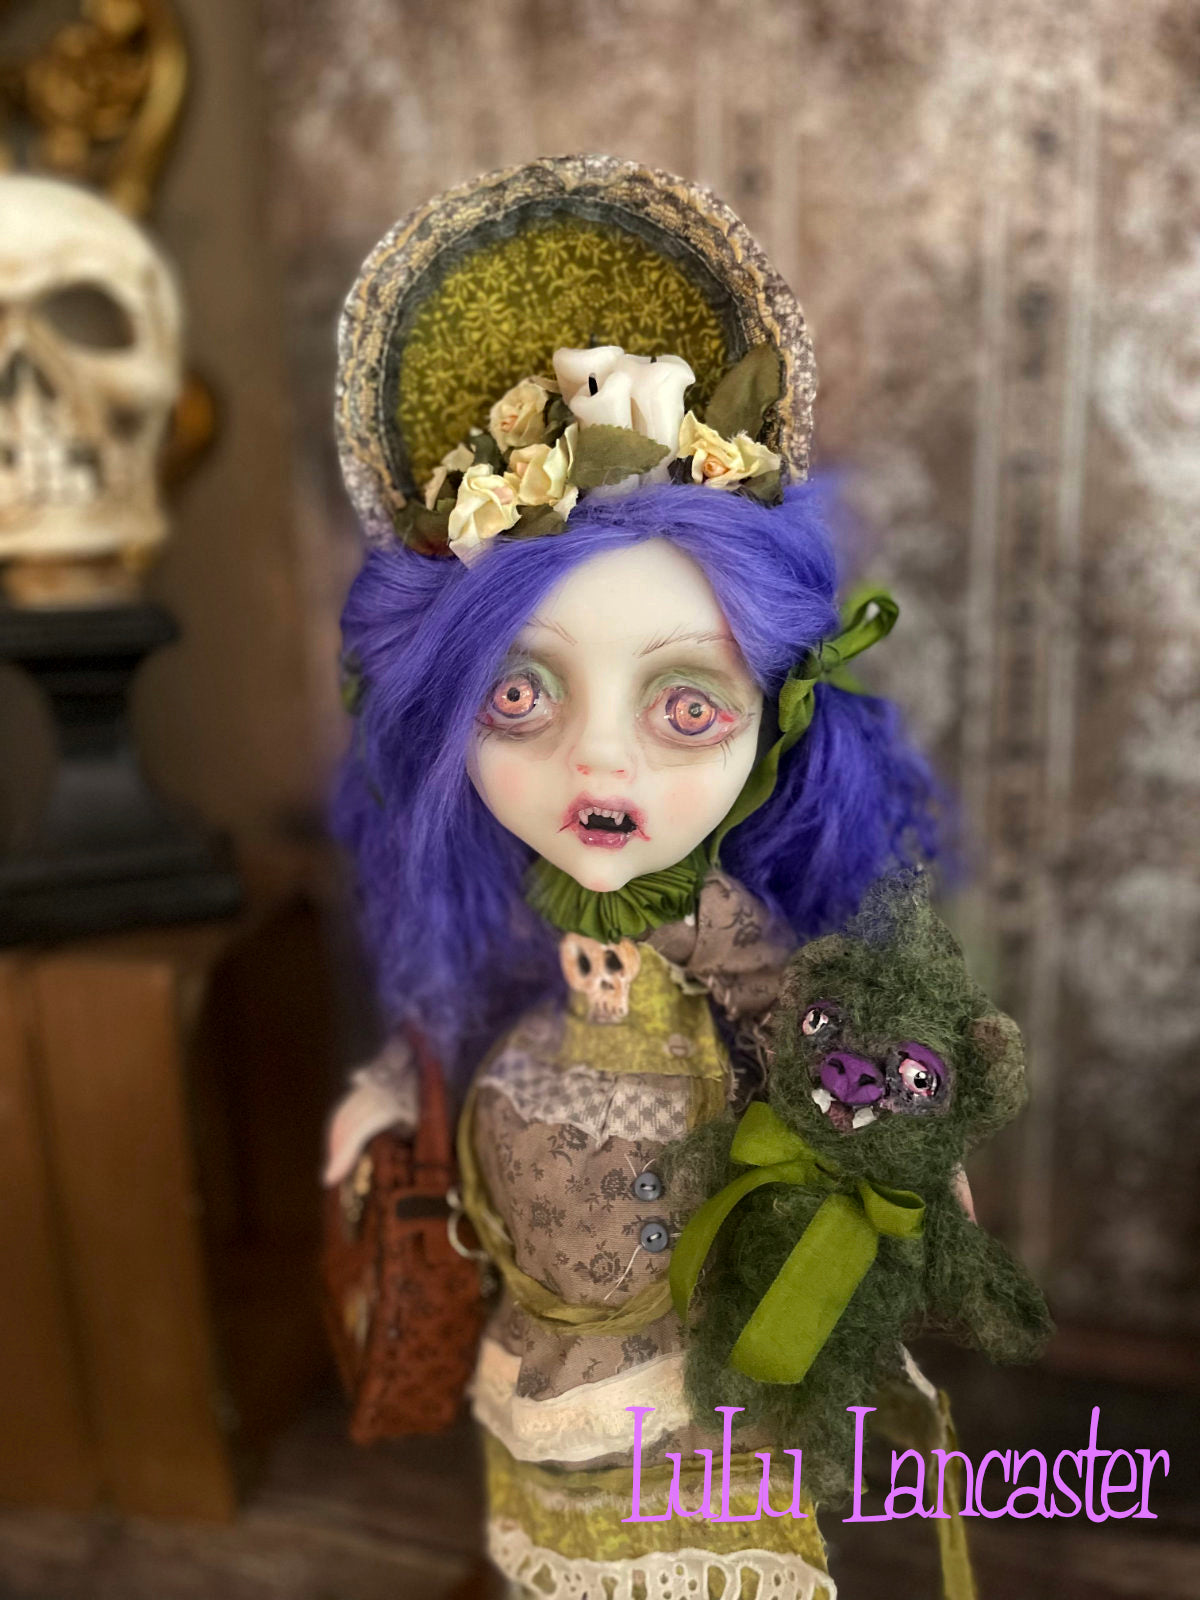 Cornelia and the scary Bear Vampire Original LuLu Lancaster Art Doll